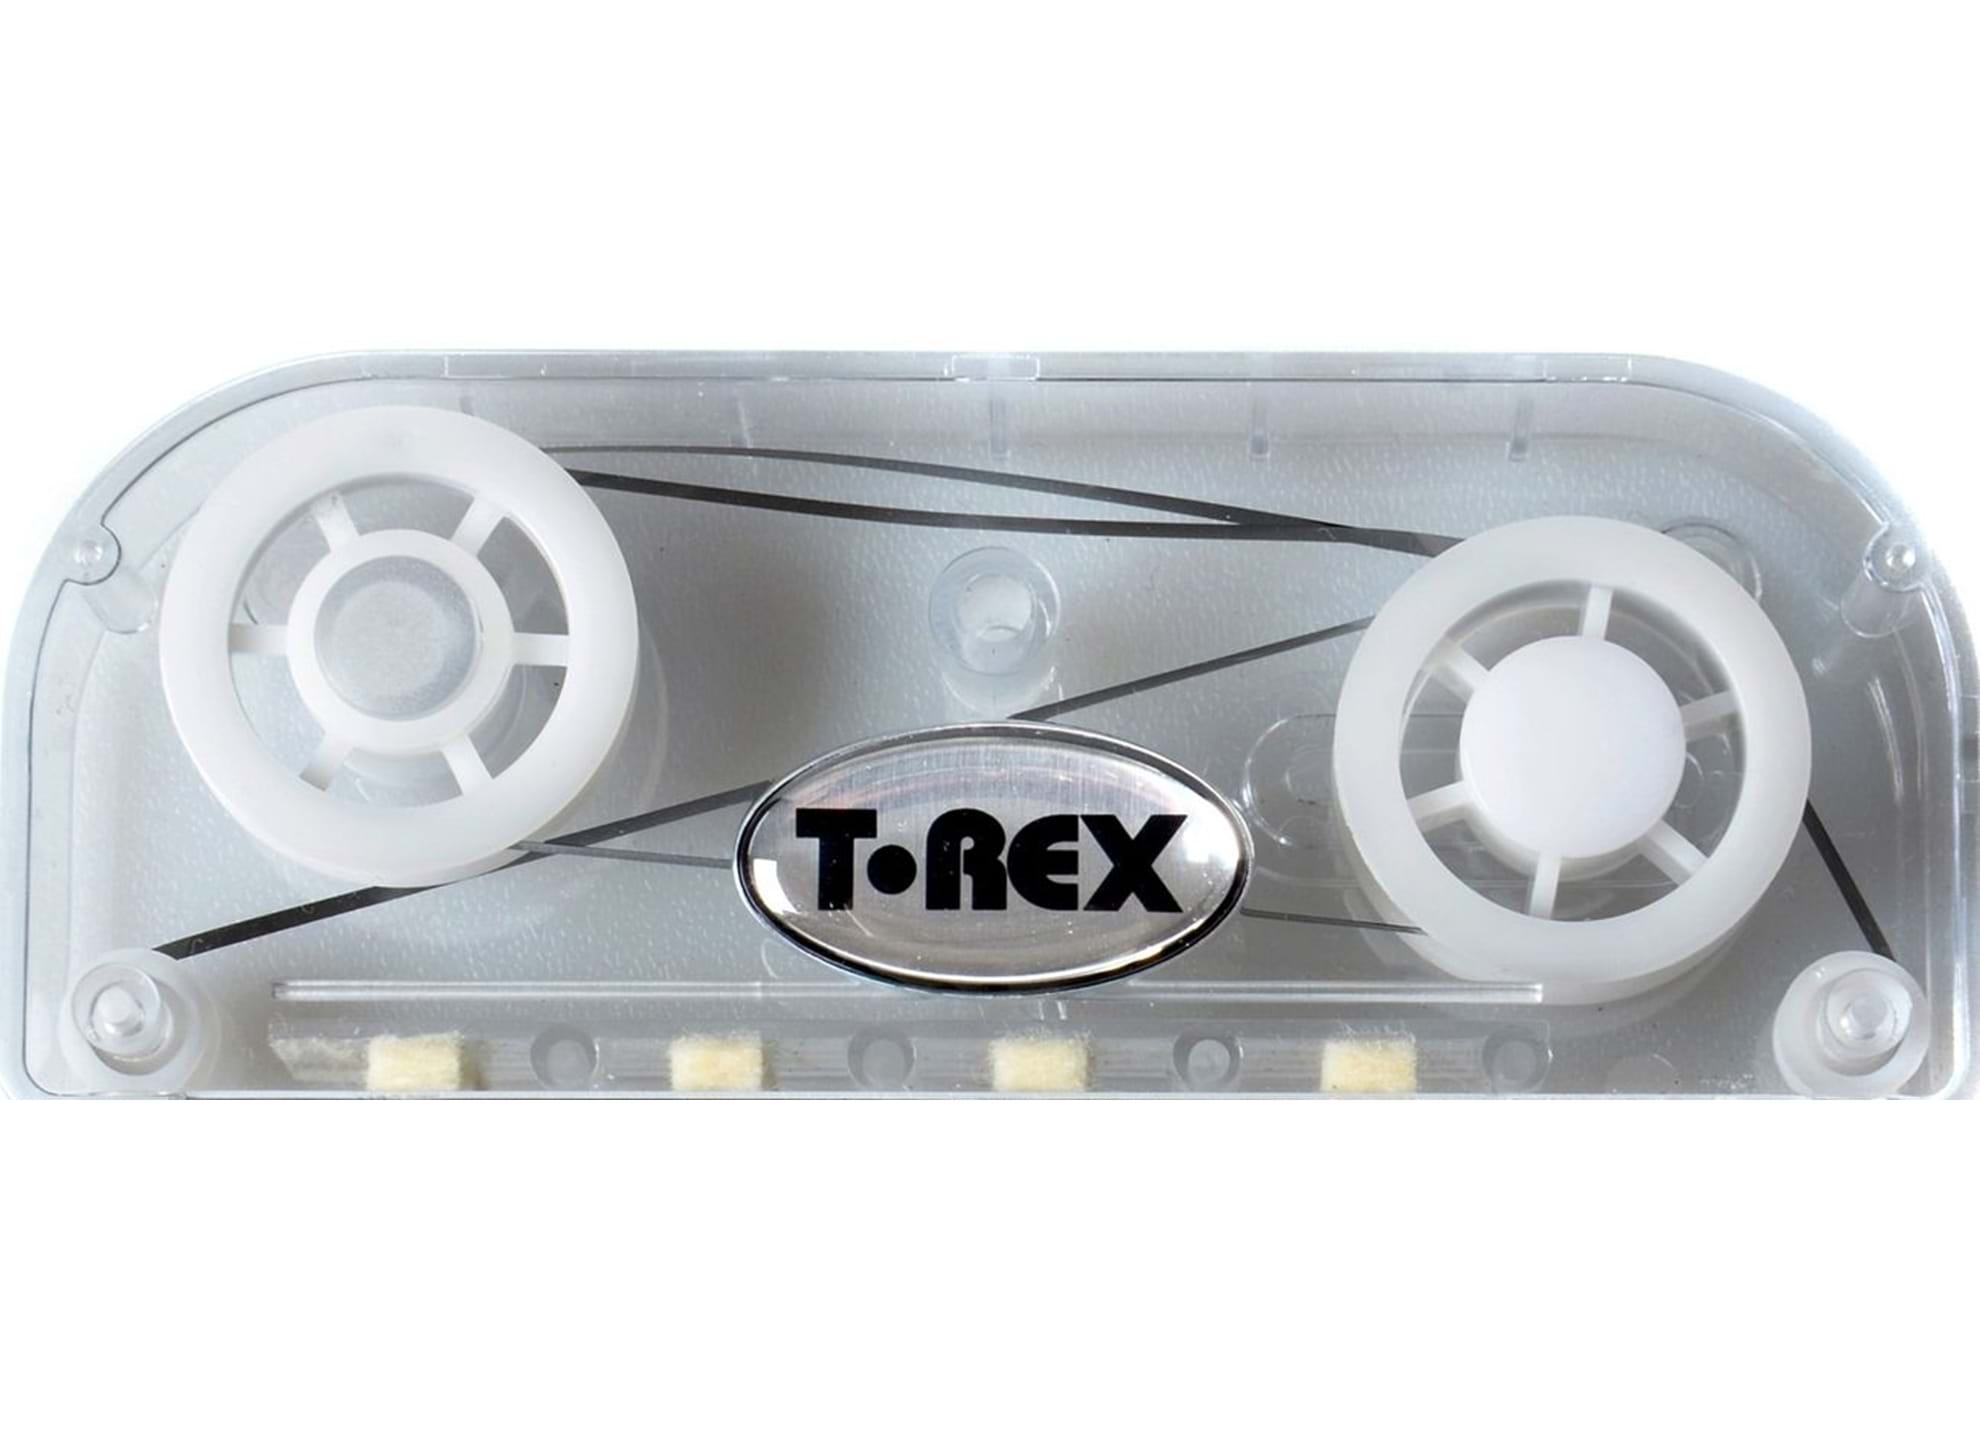 Replicator Tape Cartridge